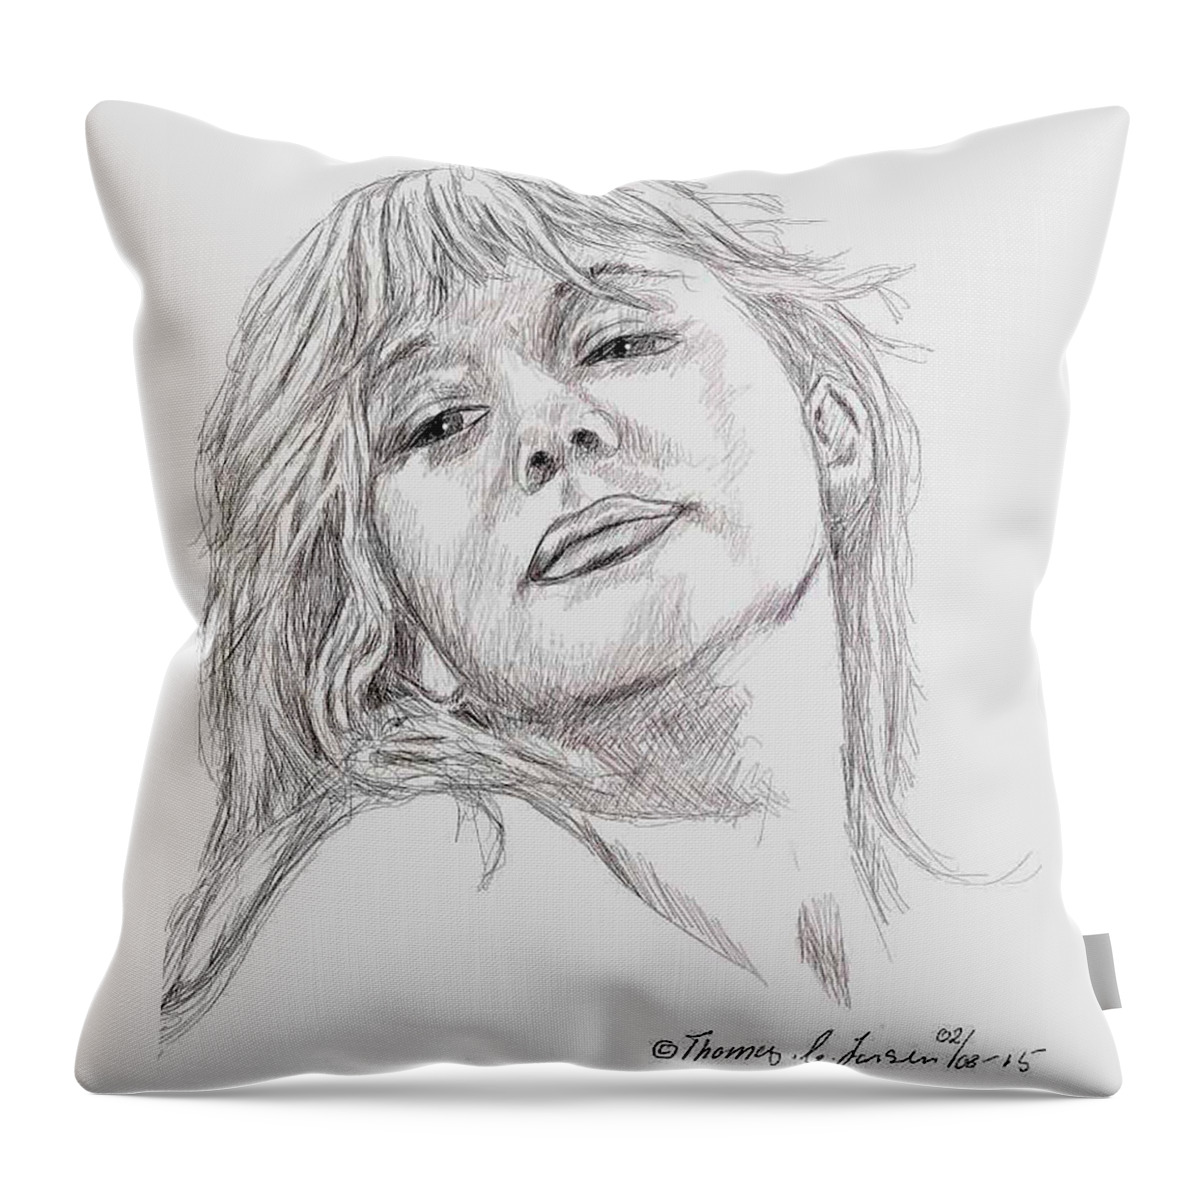 Portrait Throw Pillow featuring the digital art Dame Helen mirren by ThomasE Jensen